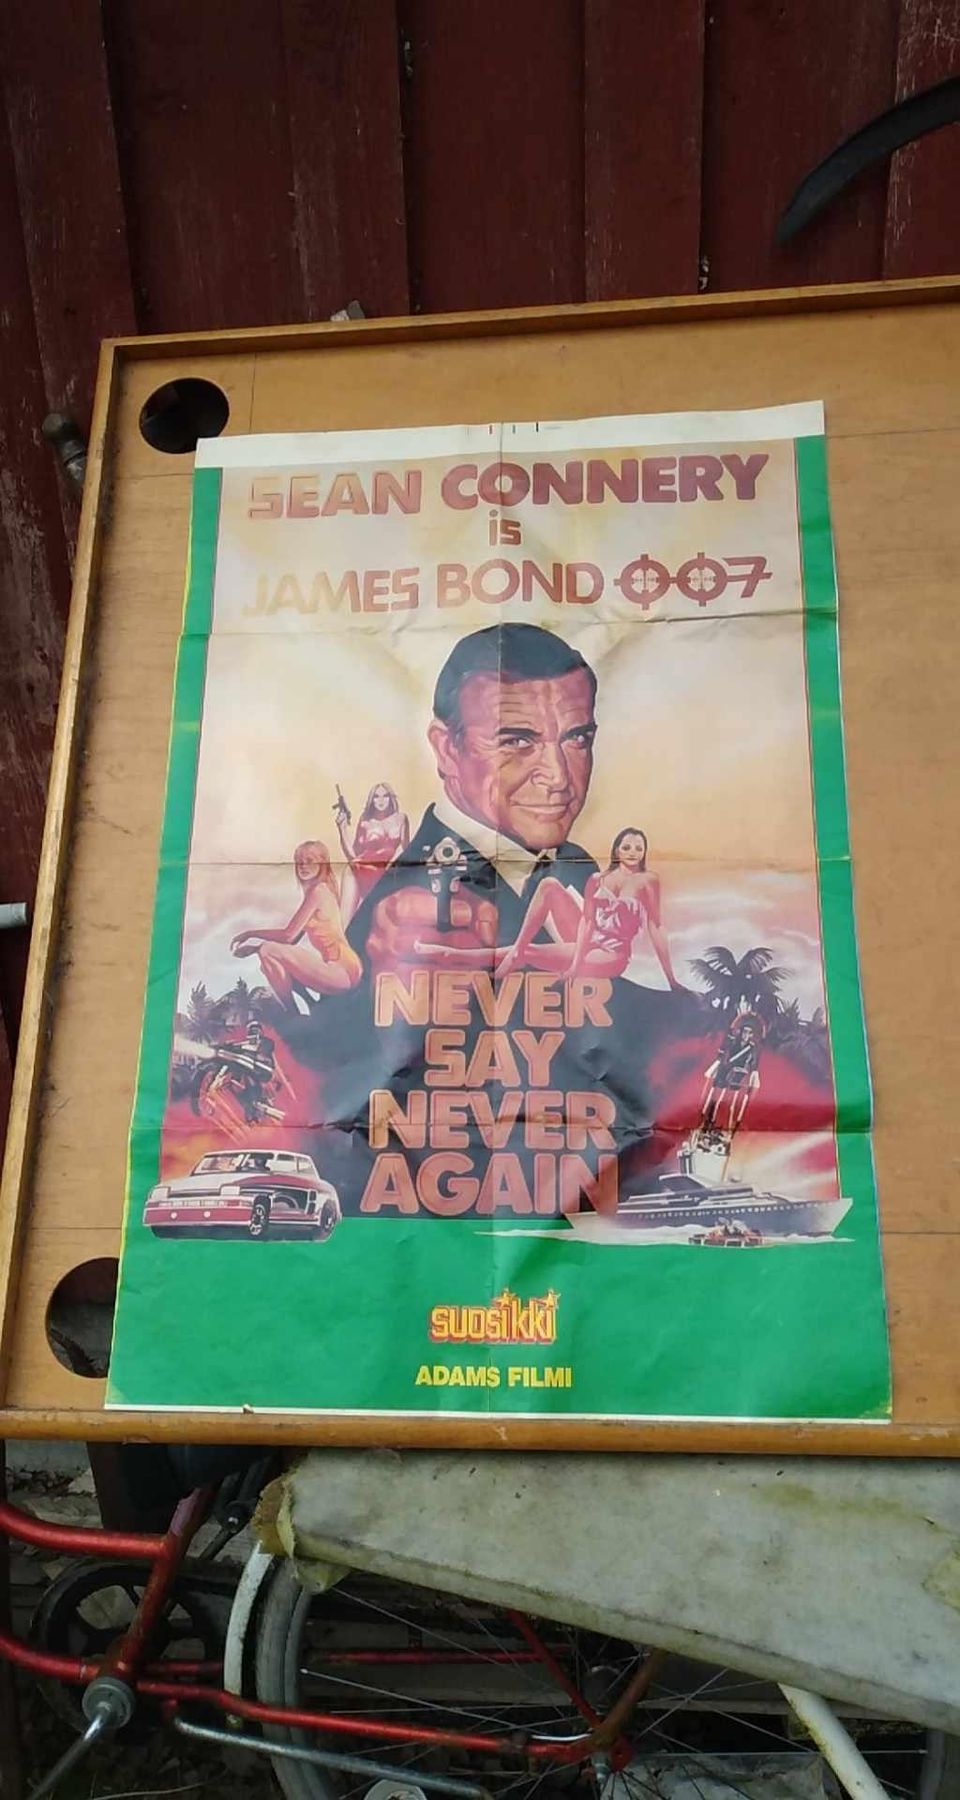 James Bond juliste/ Broadcast 84.